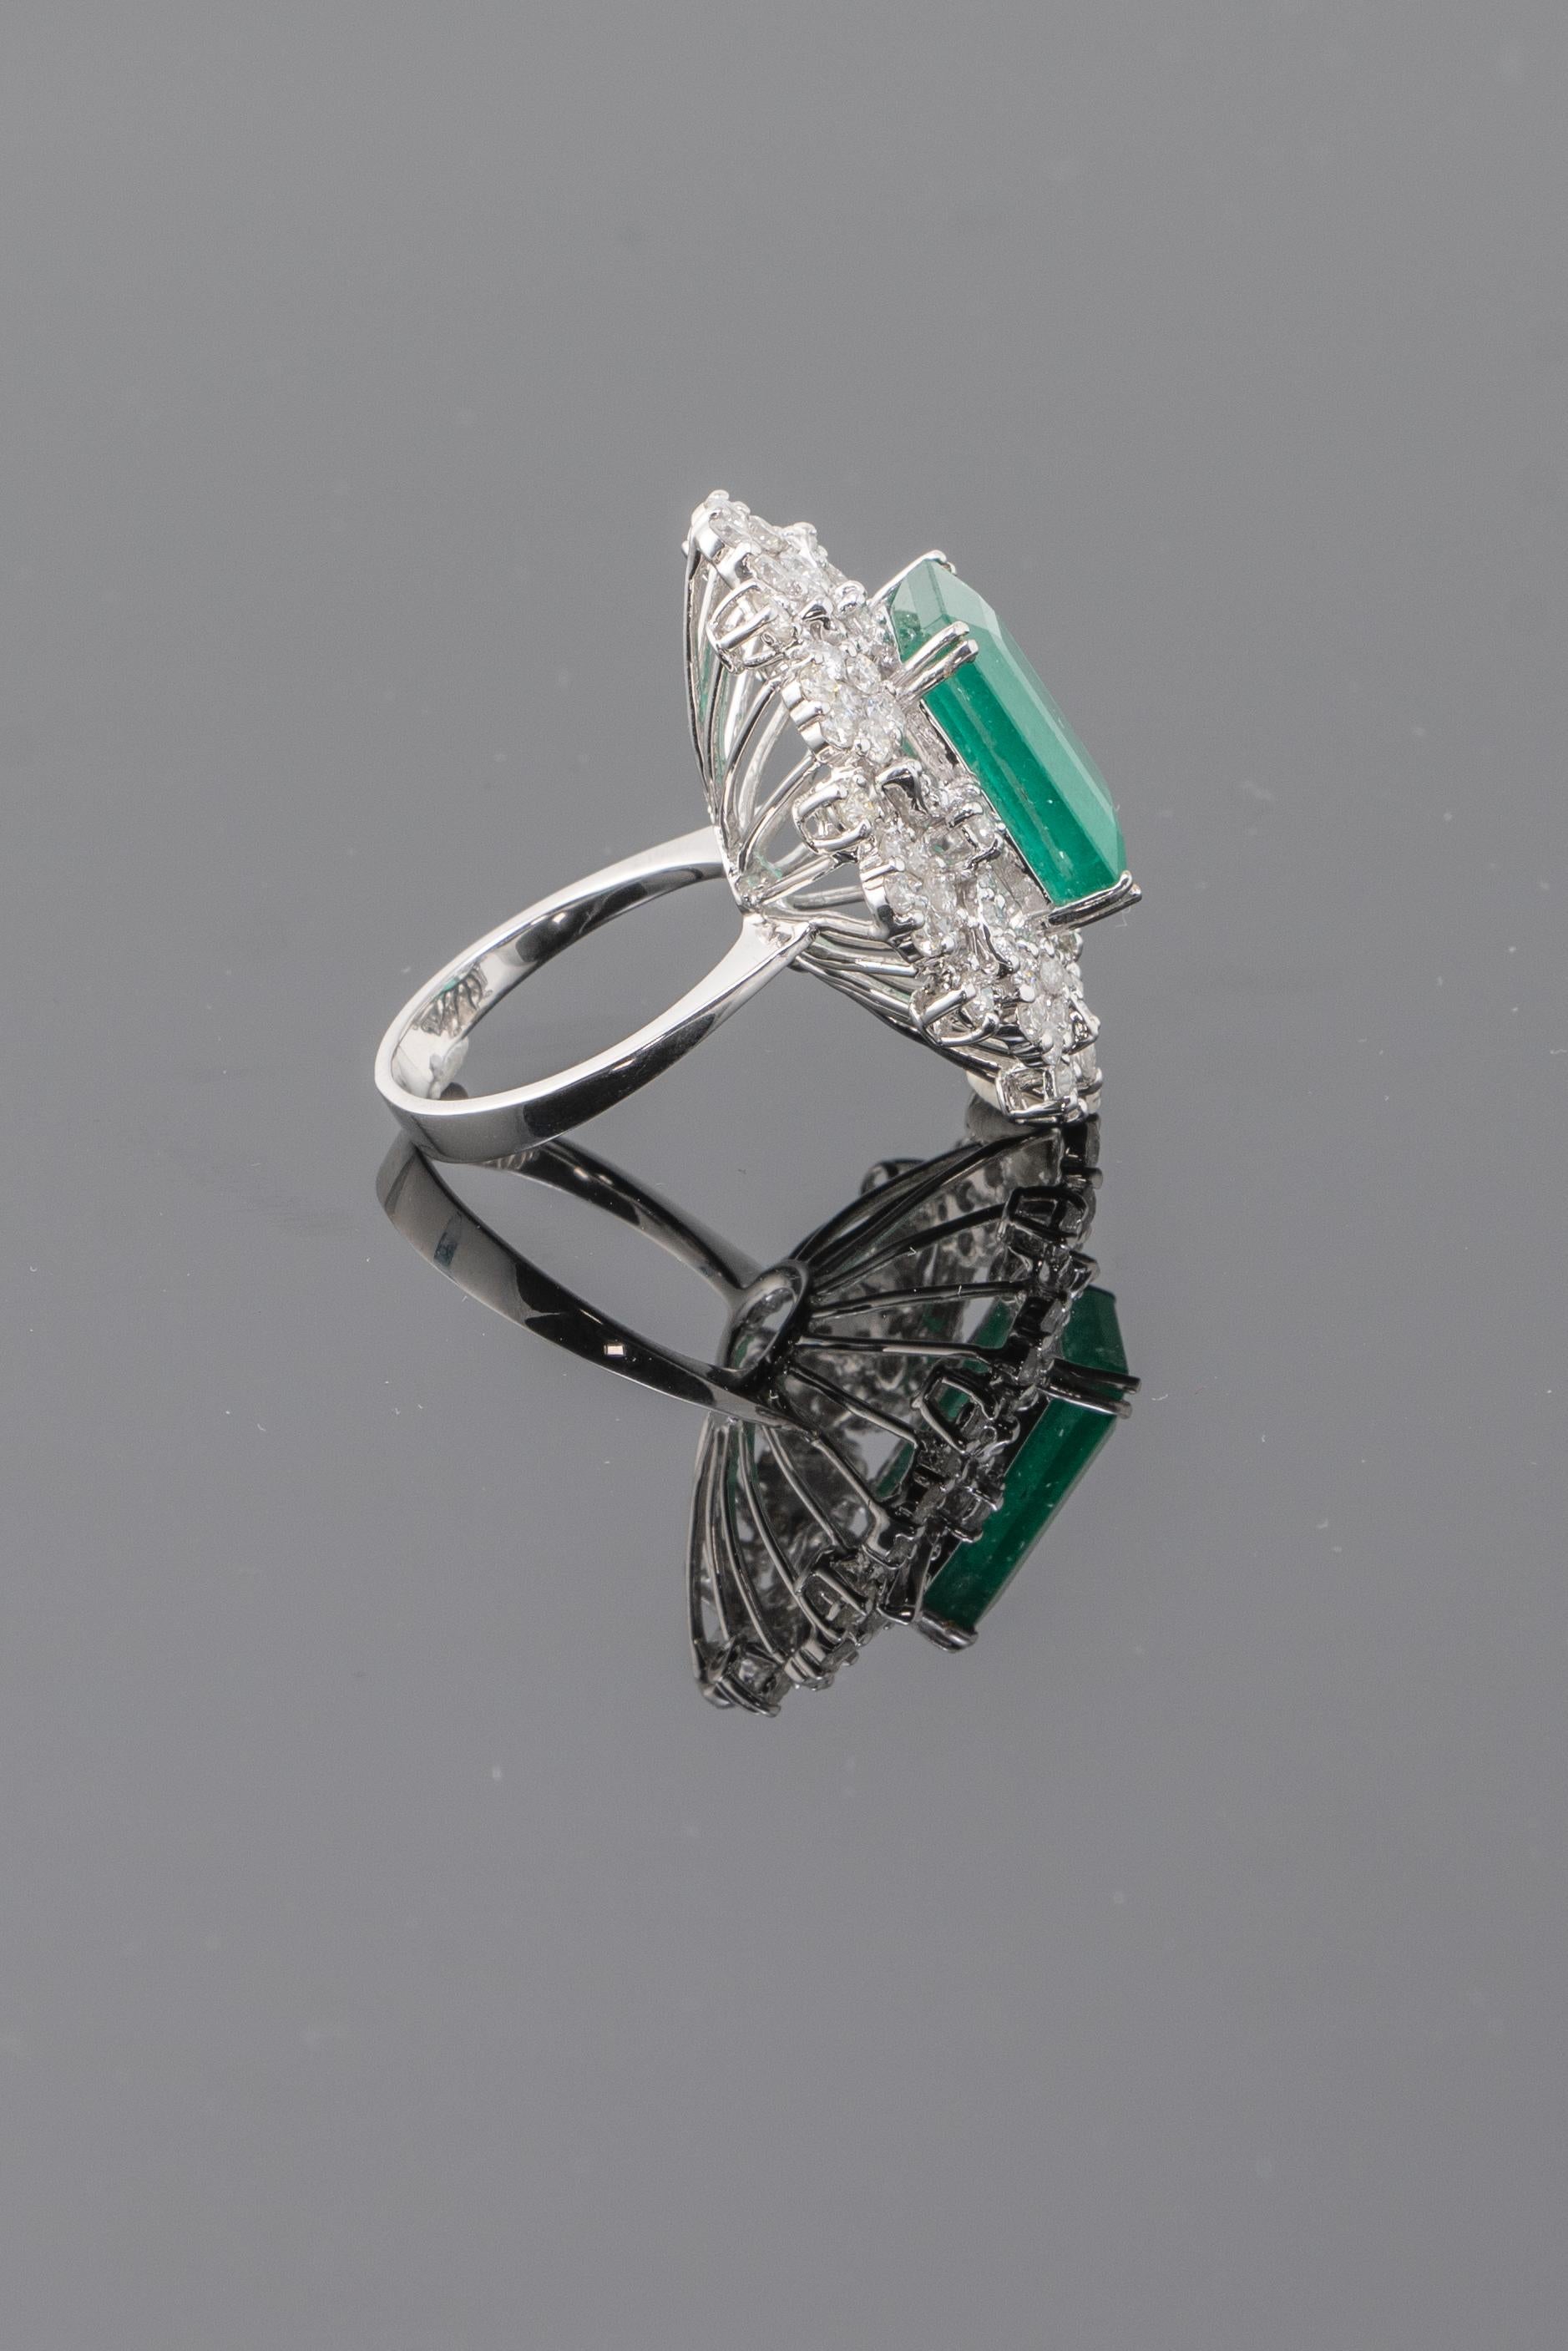 8.7 carat diamond ring